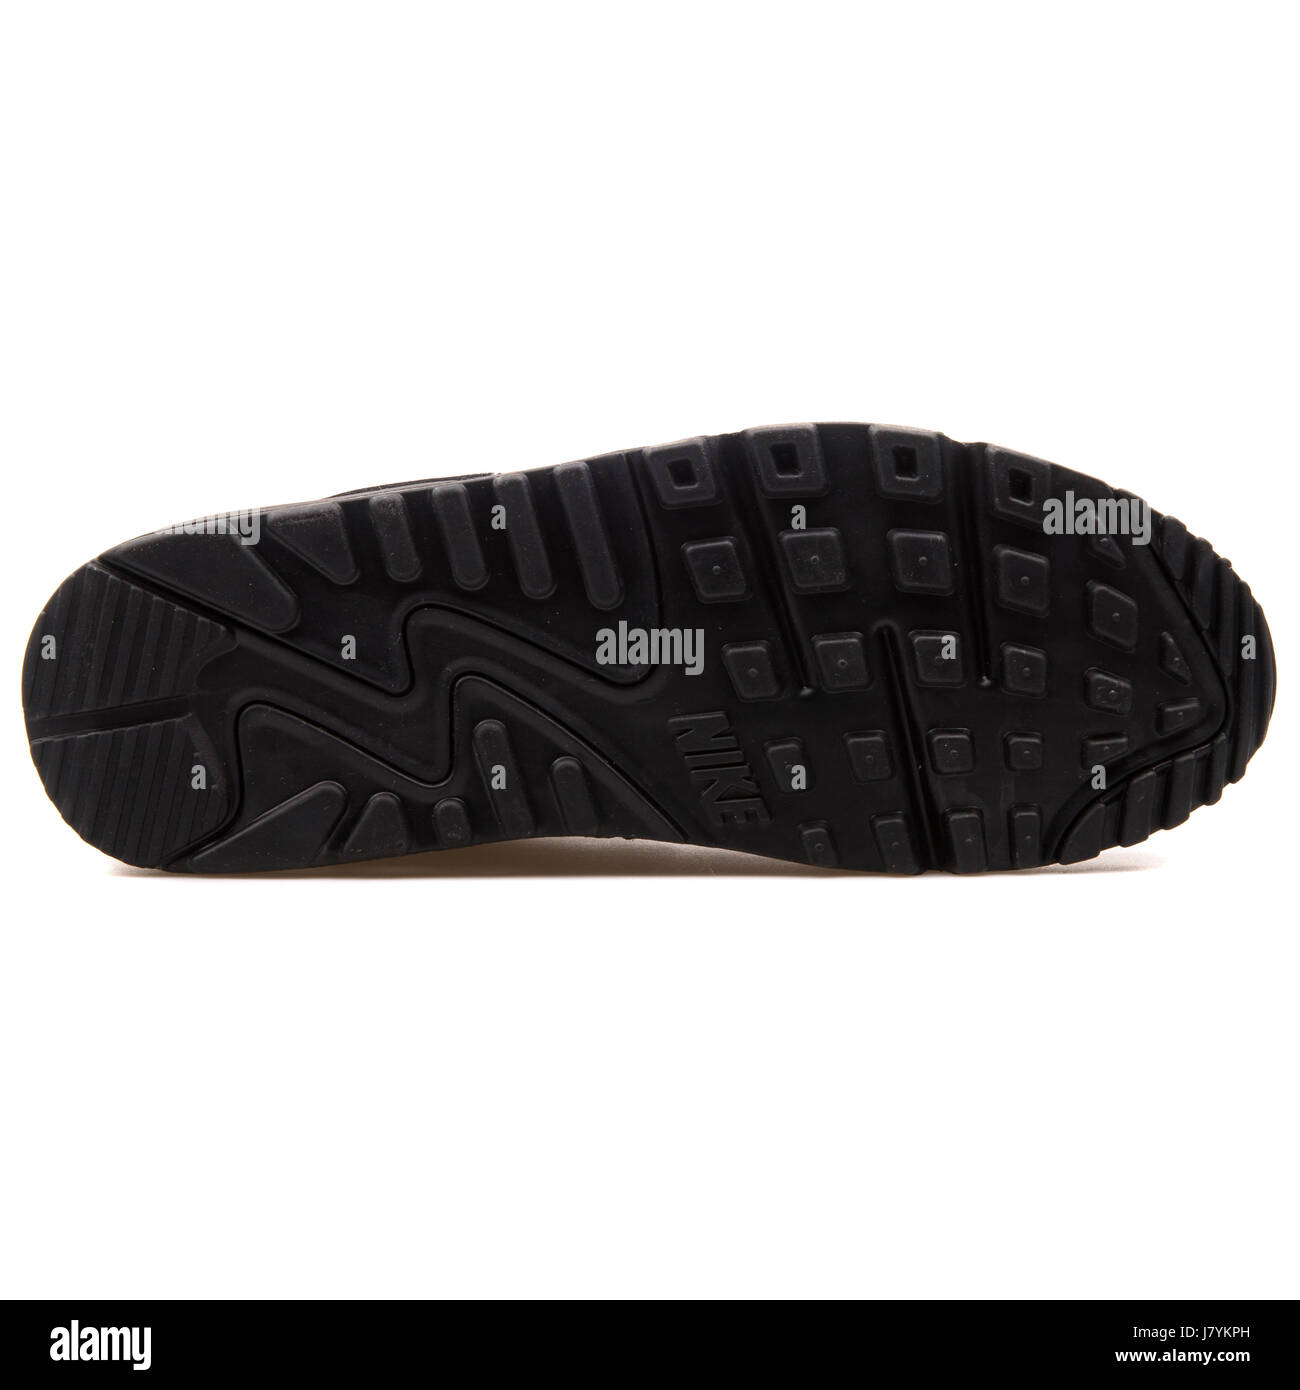 Nike WMNS Air Max 90 Premium Women's Black Glossy Sneakers - 443817-002  Stock Photo - Alamy